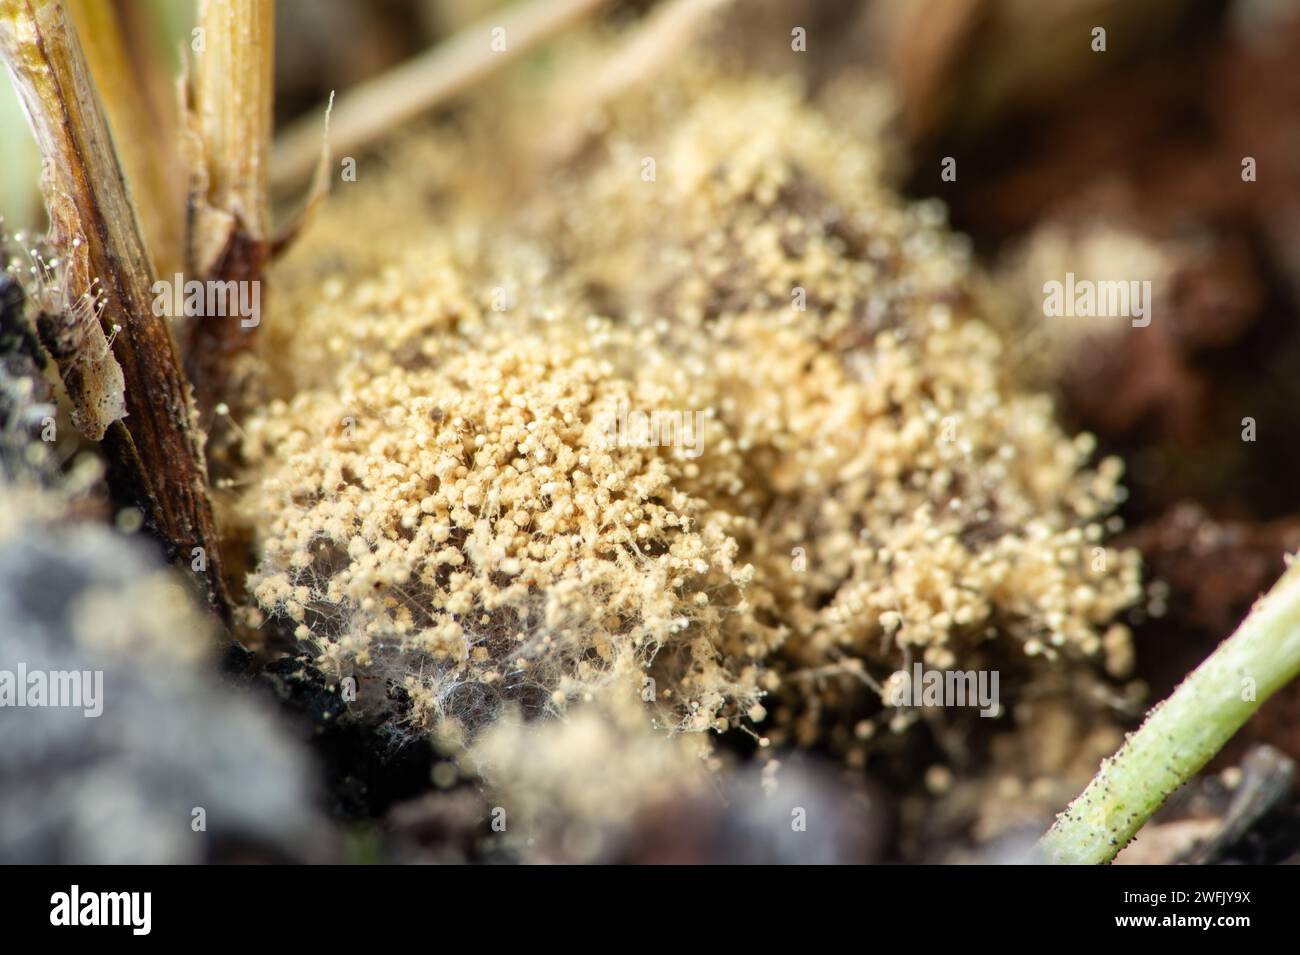 Detail of yellow mold on soil in houseplant pot Stock Photo